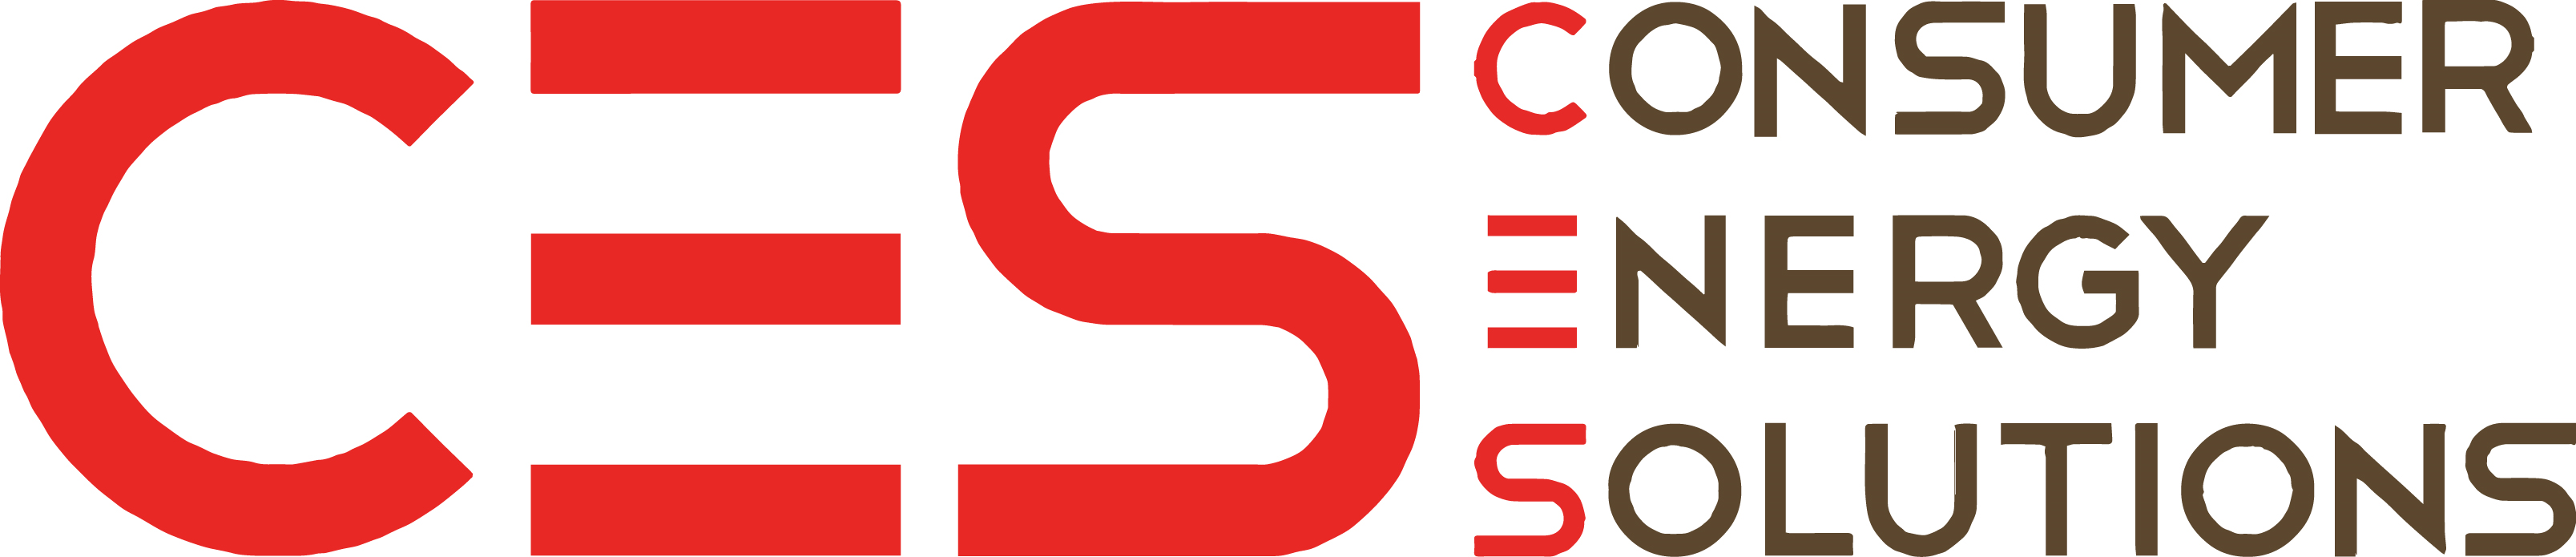 Consumer Energy Solutions logo